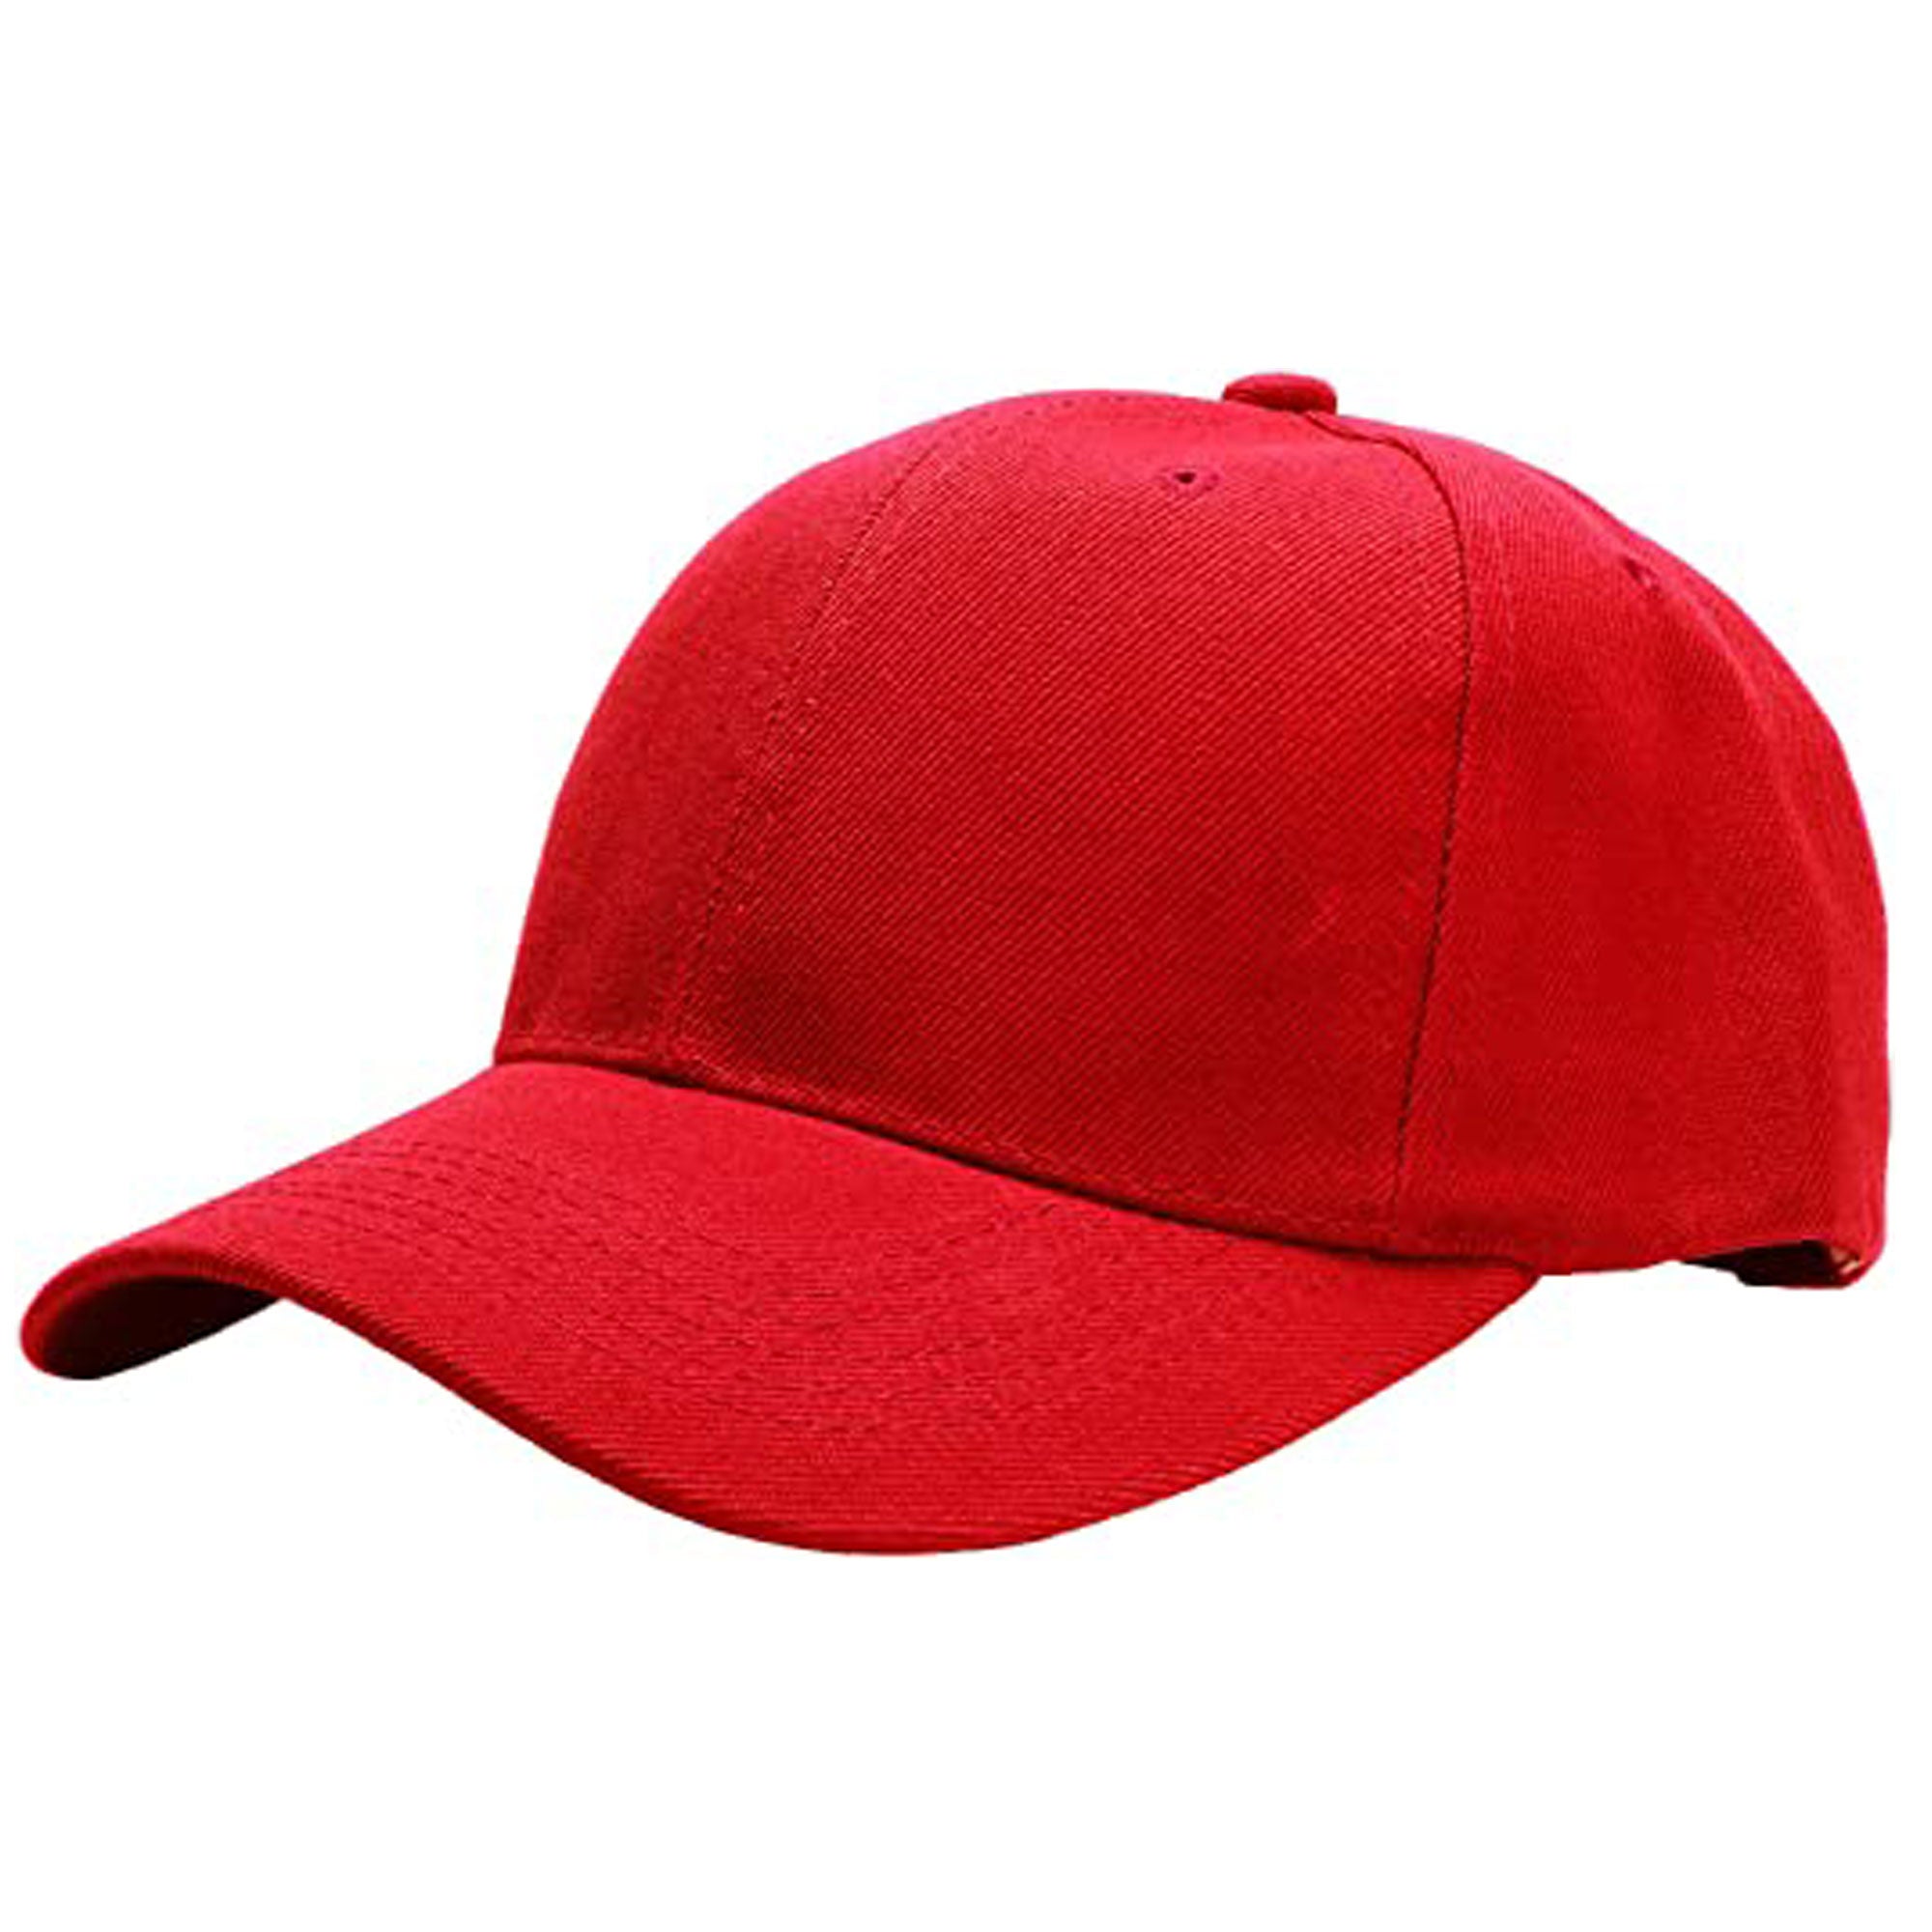 Blank Solid Color Adjustable Baseball Cap